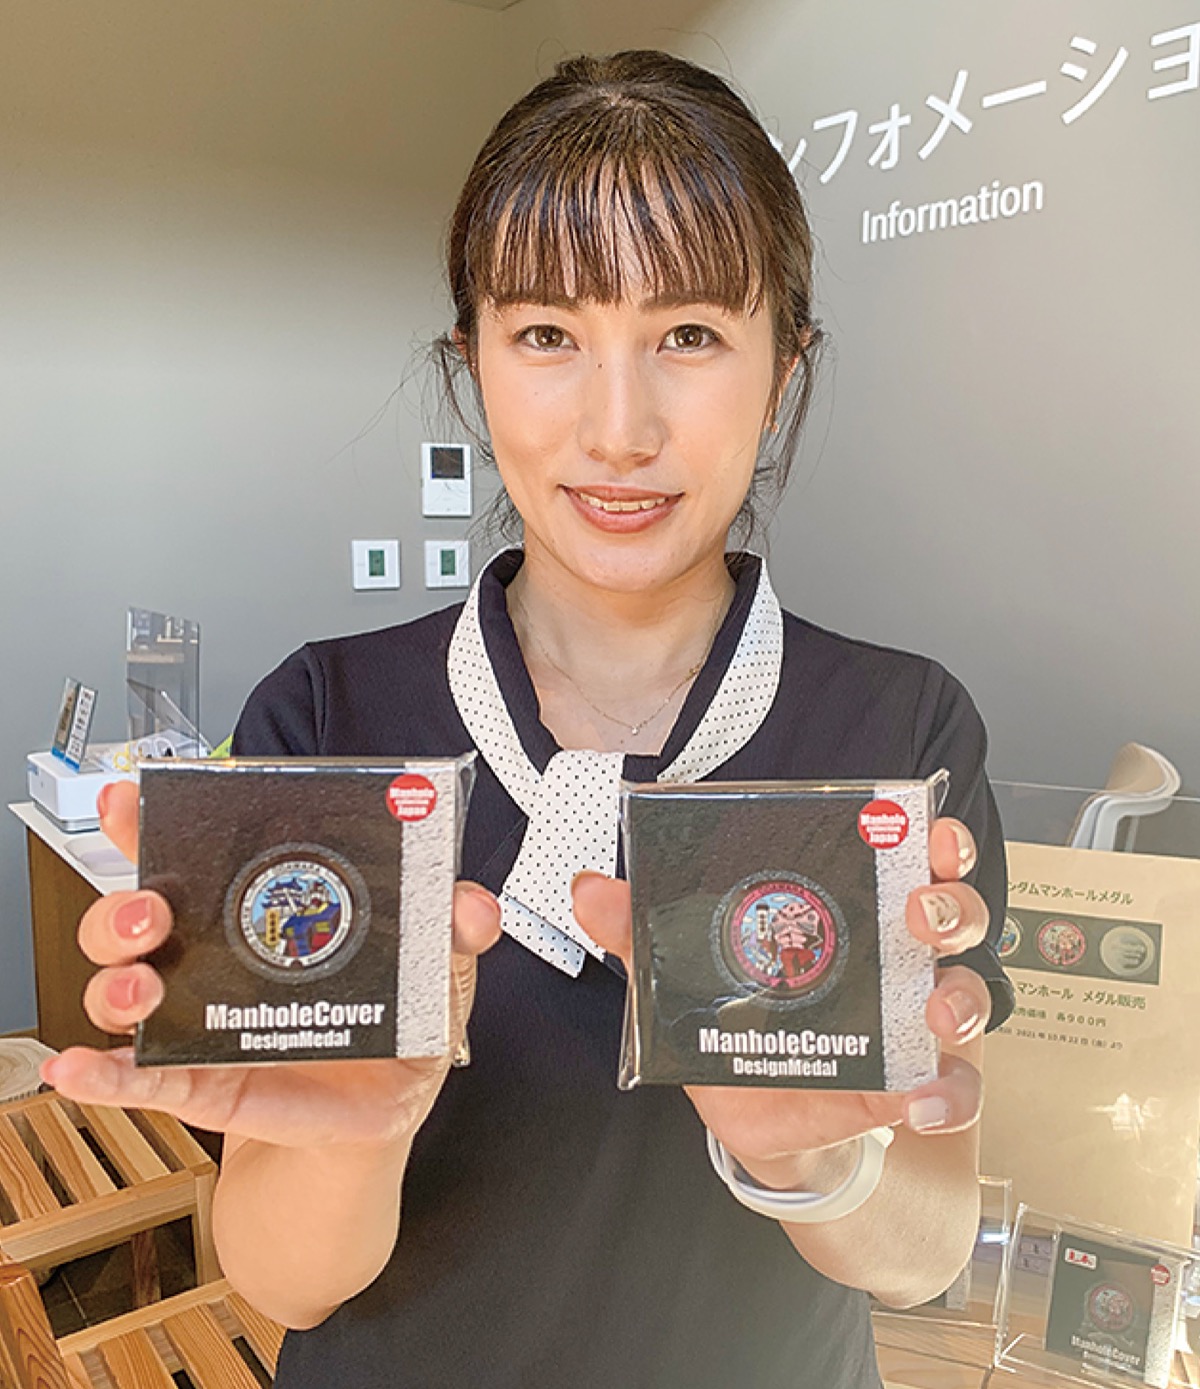 Gundam manhole cards and medals to promote Odawara city